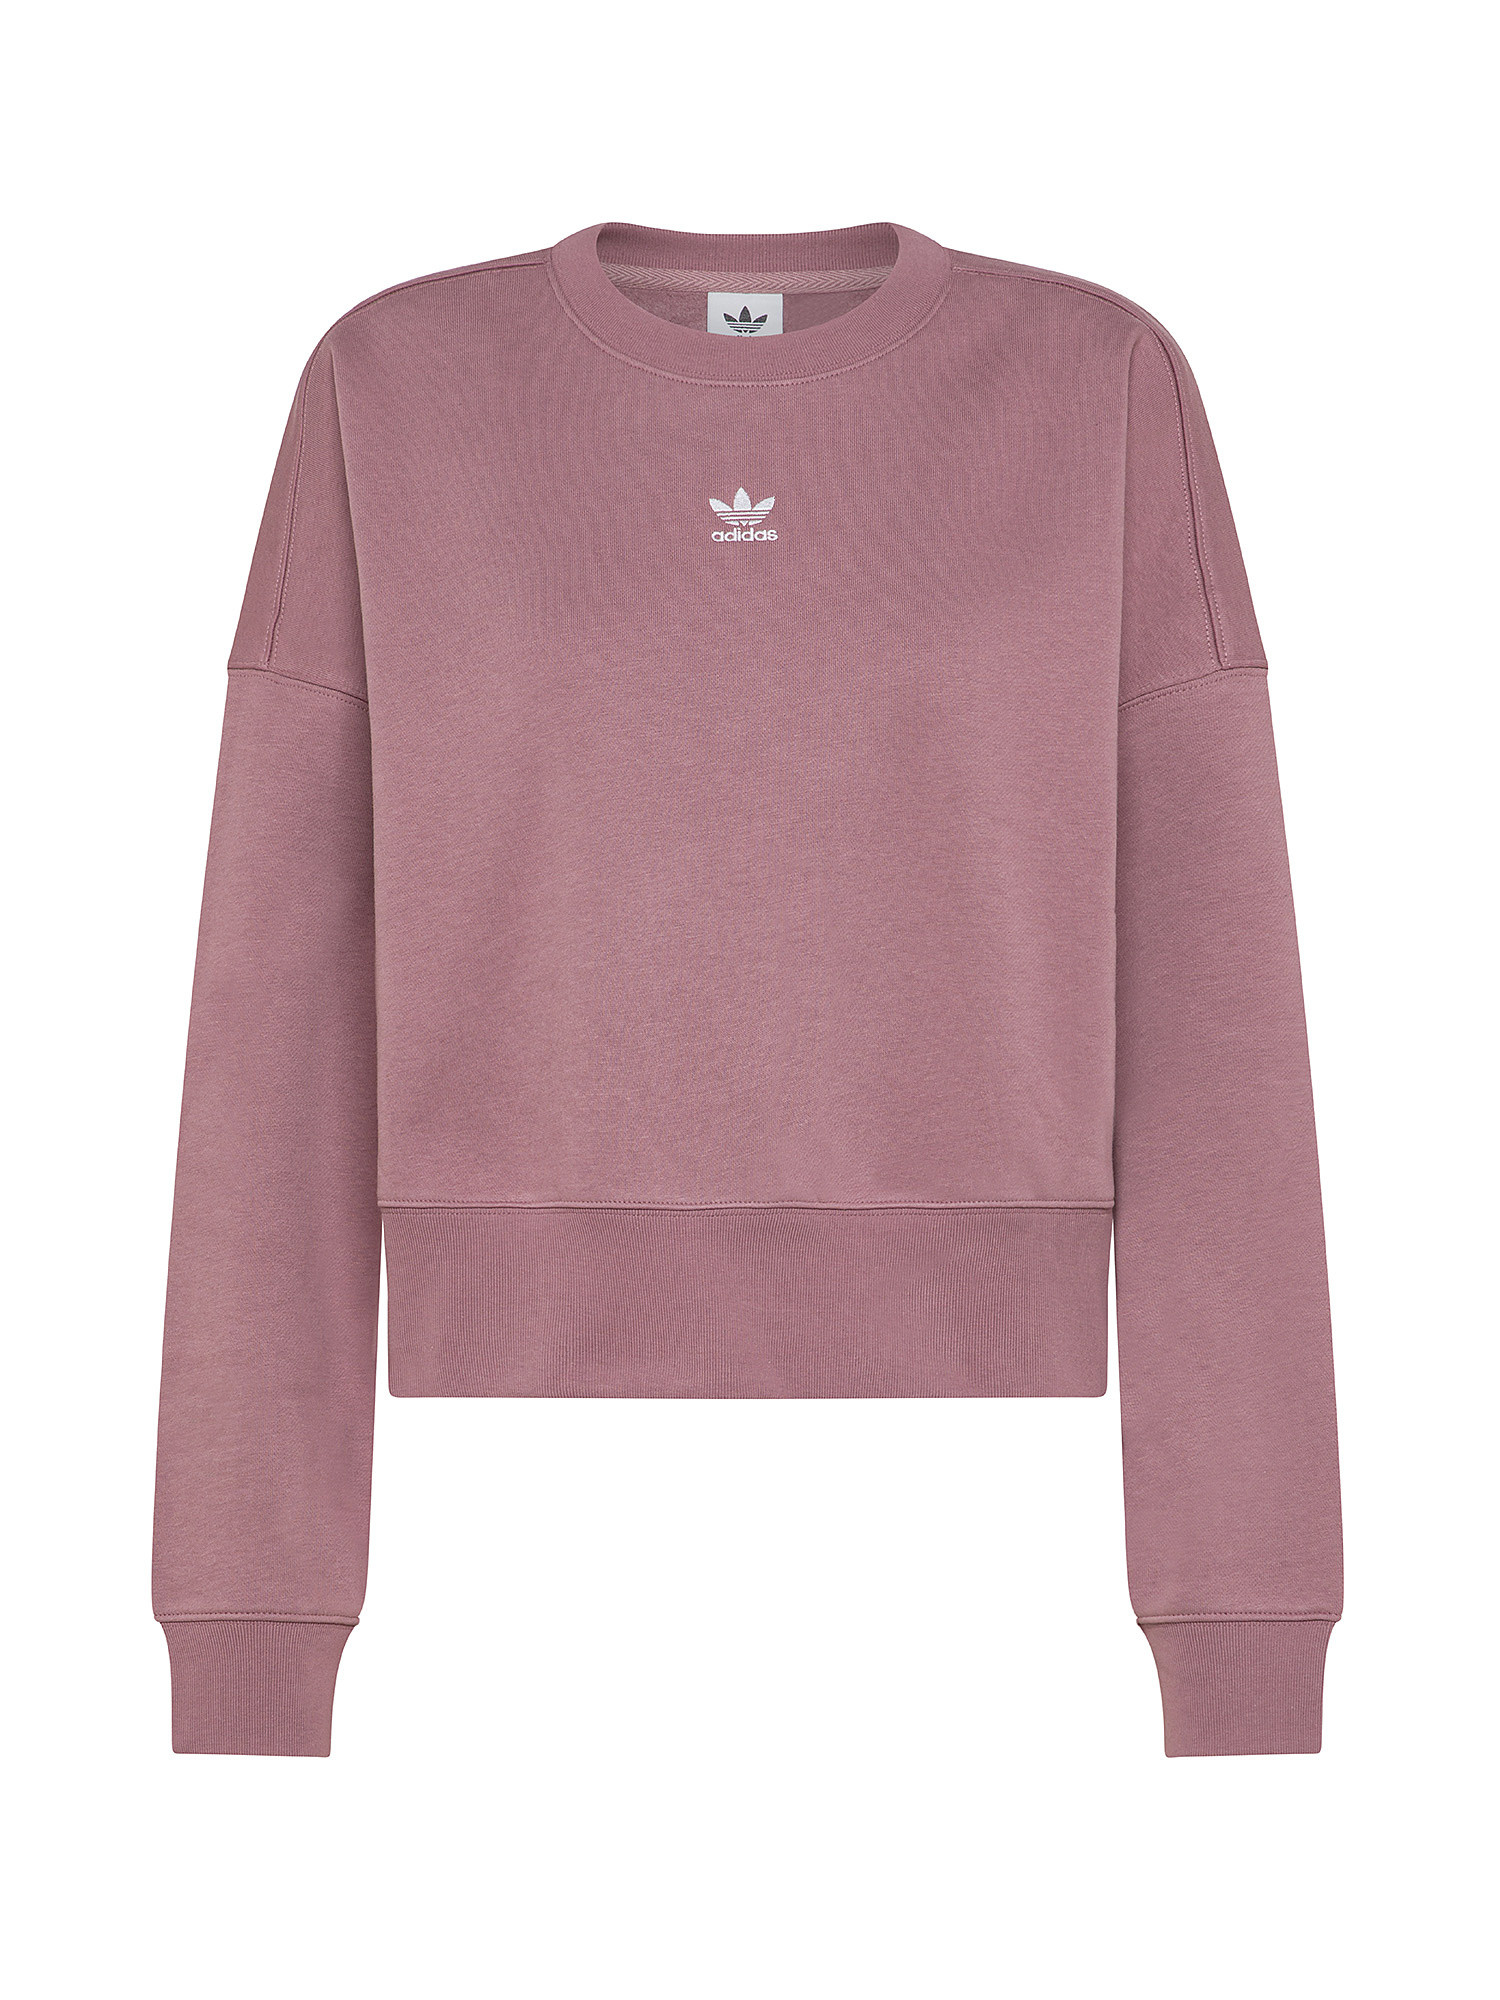 Adidas - Sweatshirt adicolor, Antique Pink, large image number 0